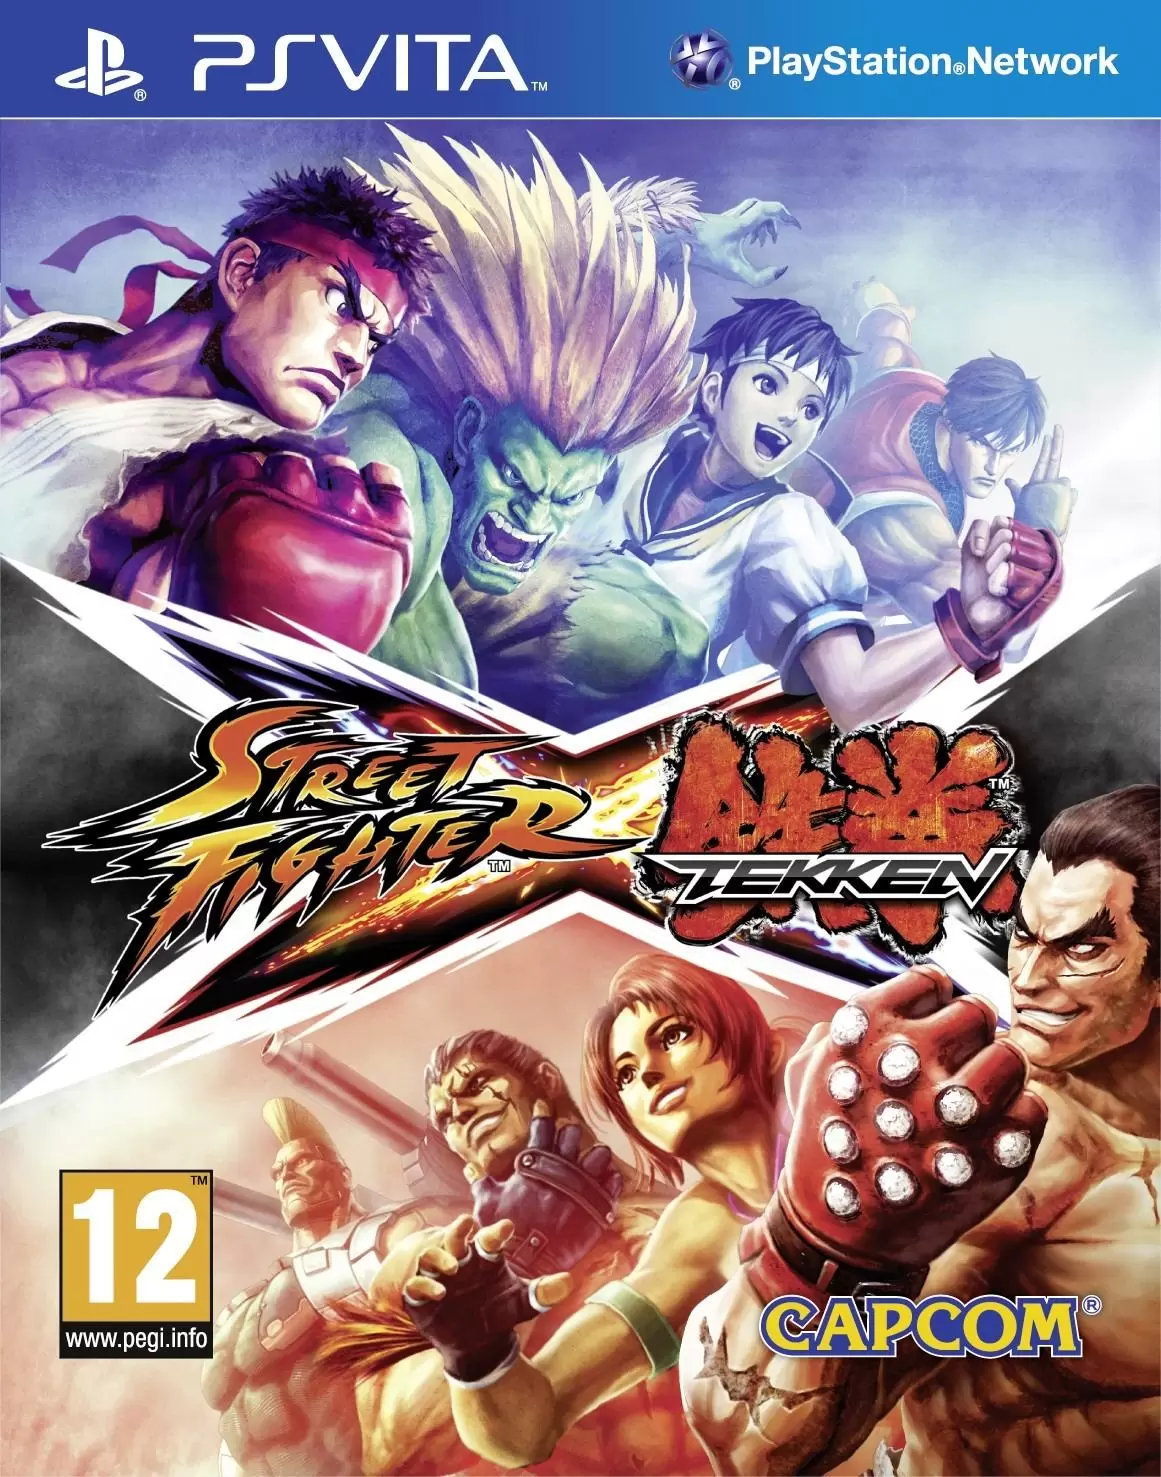 PS Vita Games - Street Fighter X Tekken